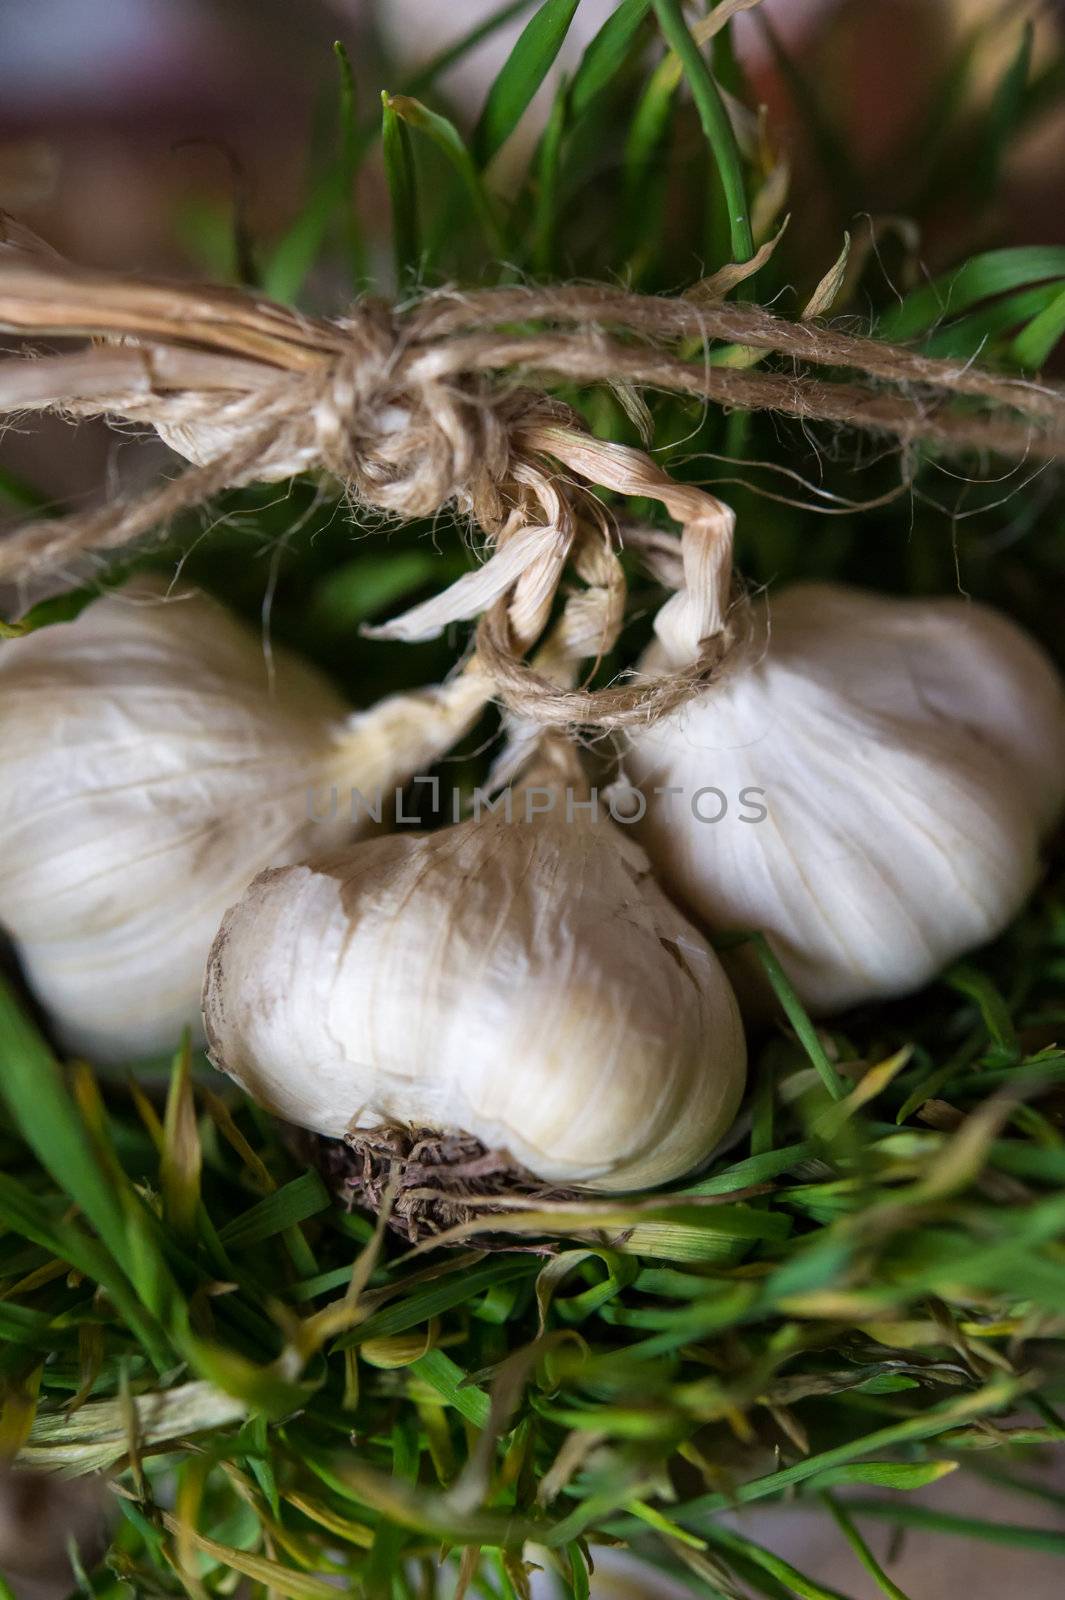 Vintage still life with tied garlic on green grass. Shallow DOF